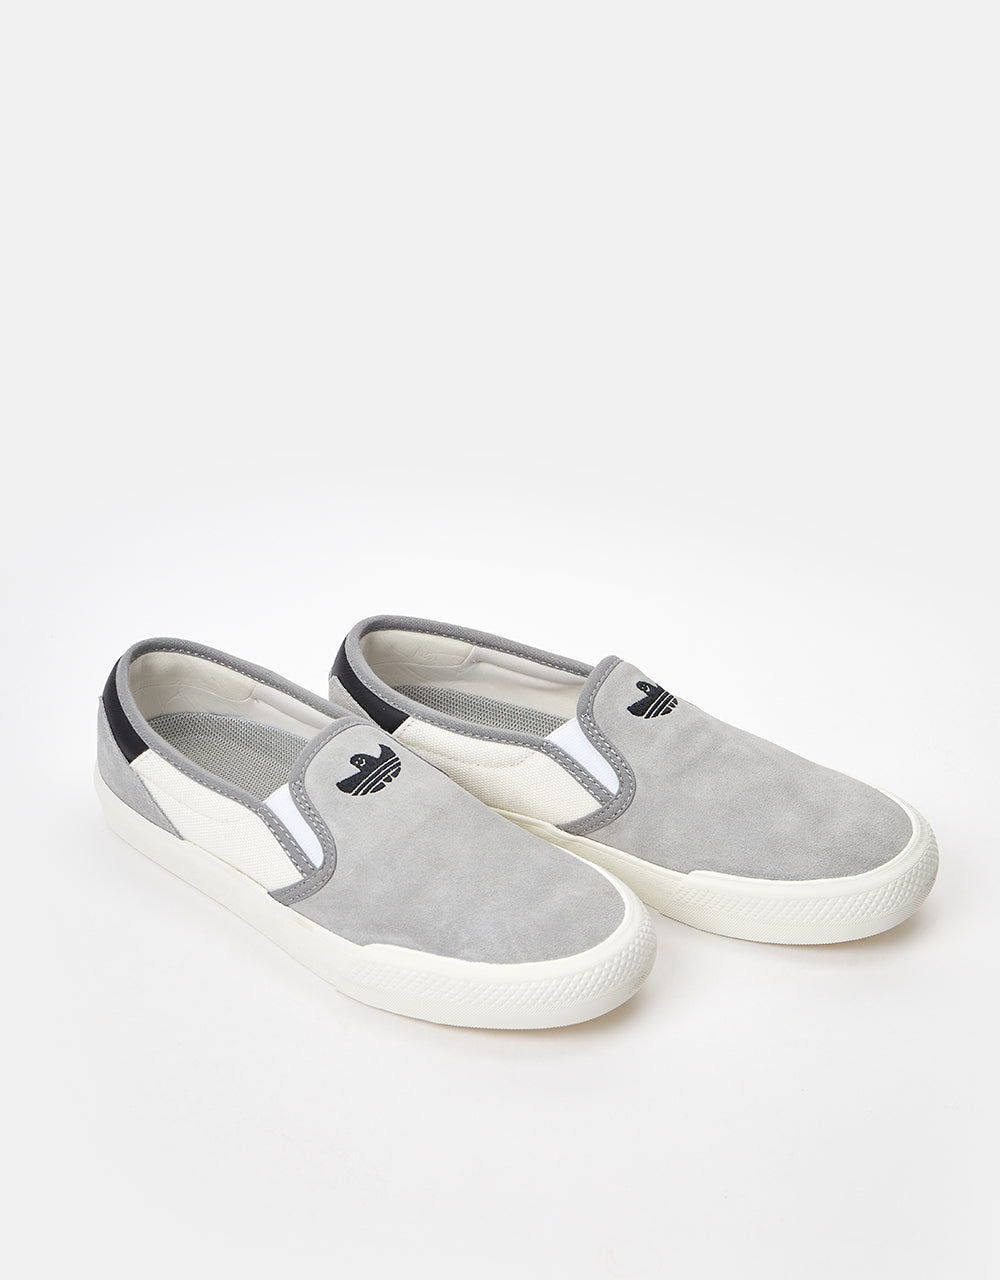 adidas Shmoofoil Slip Skate Shoes - Solid Grey/Chalk White/Core Black